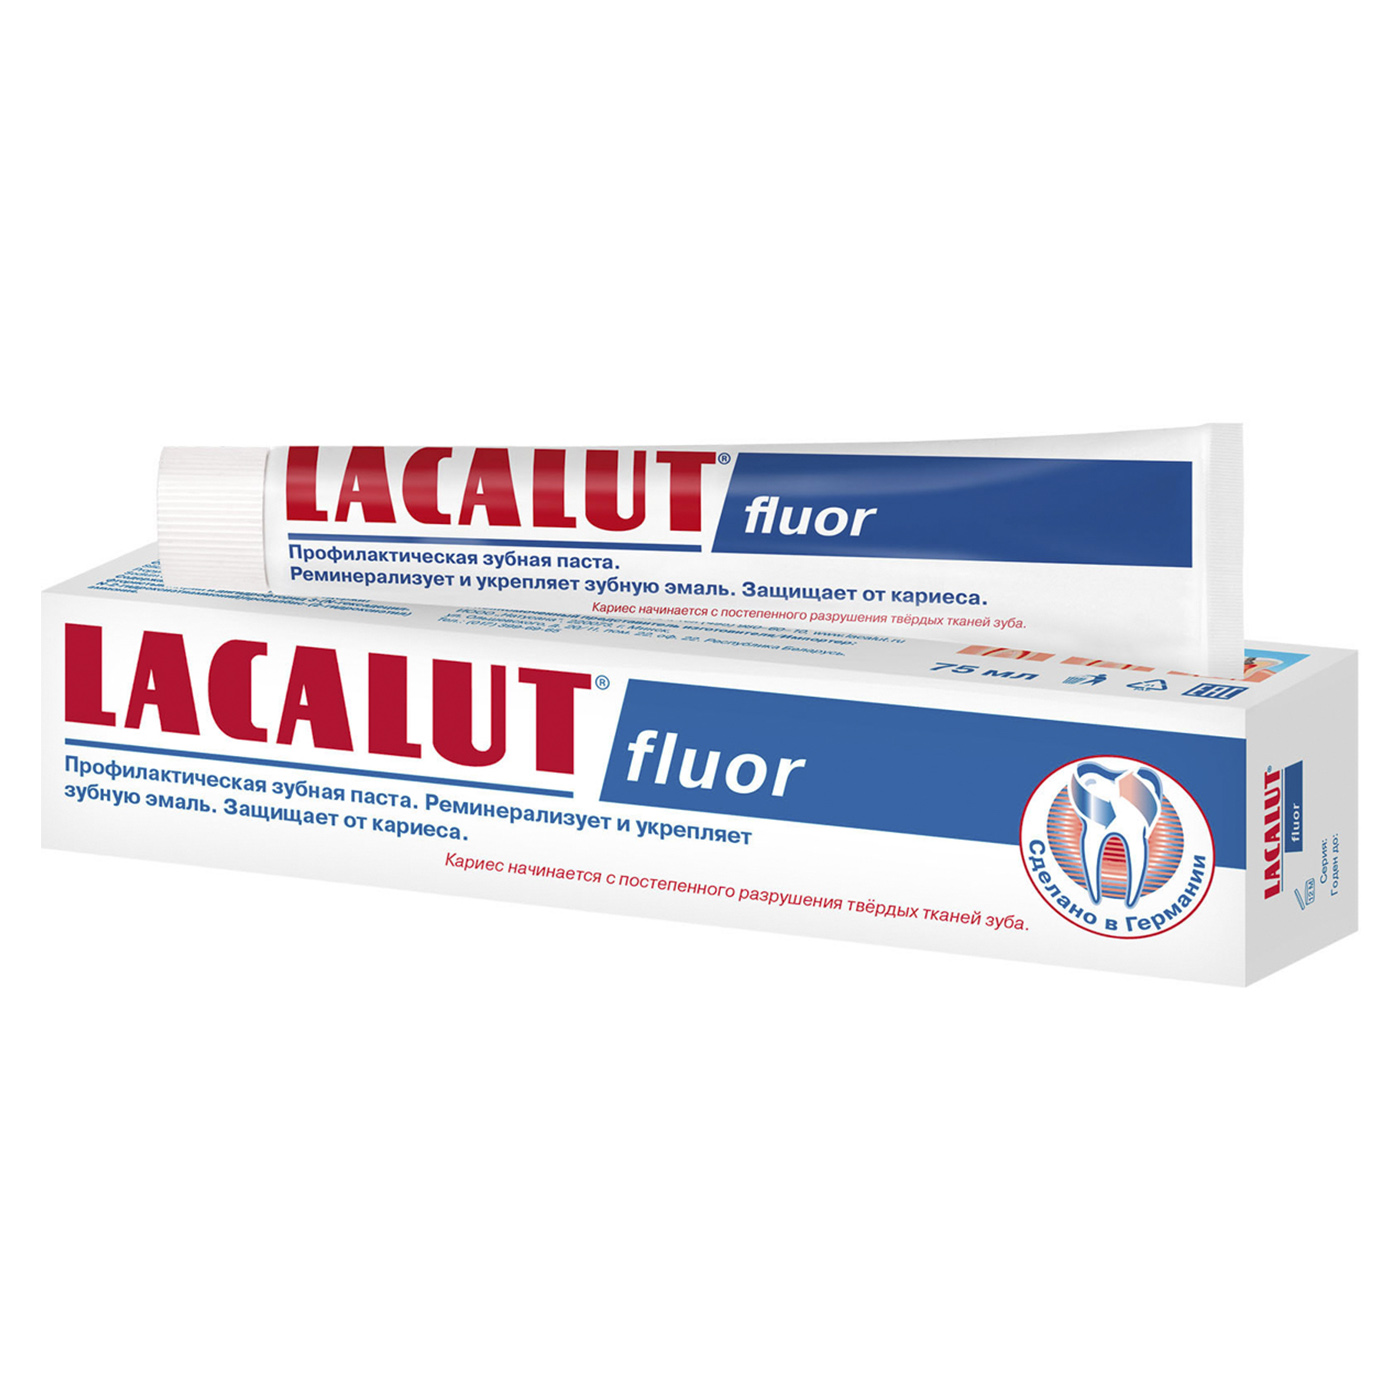 Lacalut Lacalut fluor, профилактическая зубная паста, 75 мл 